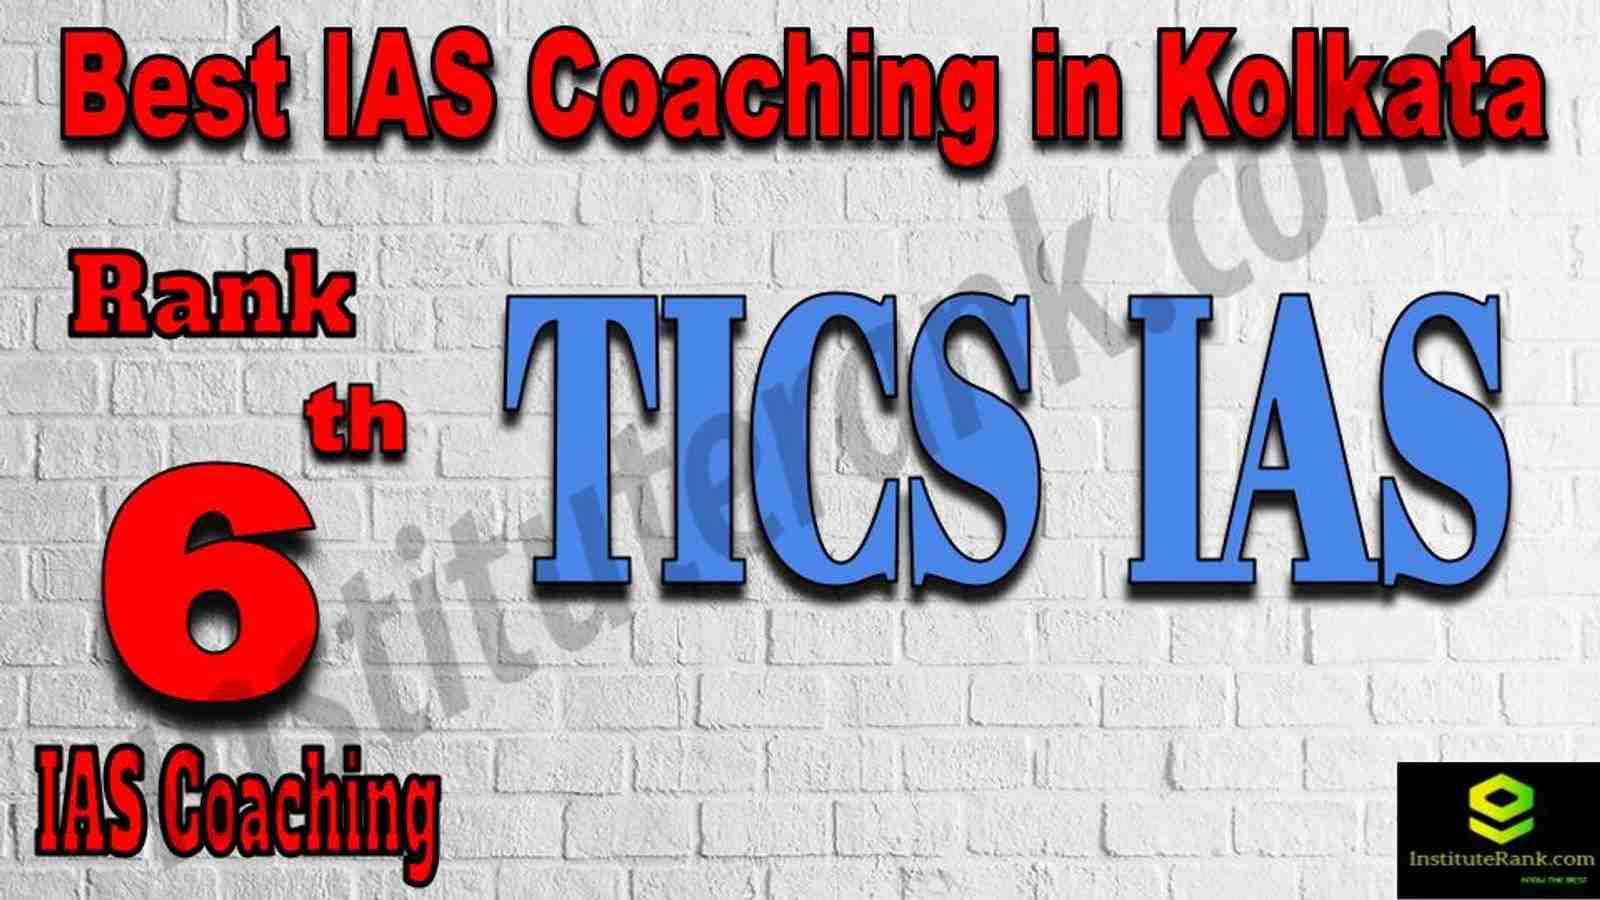 6th Best IAS Coaching in Kolkata